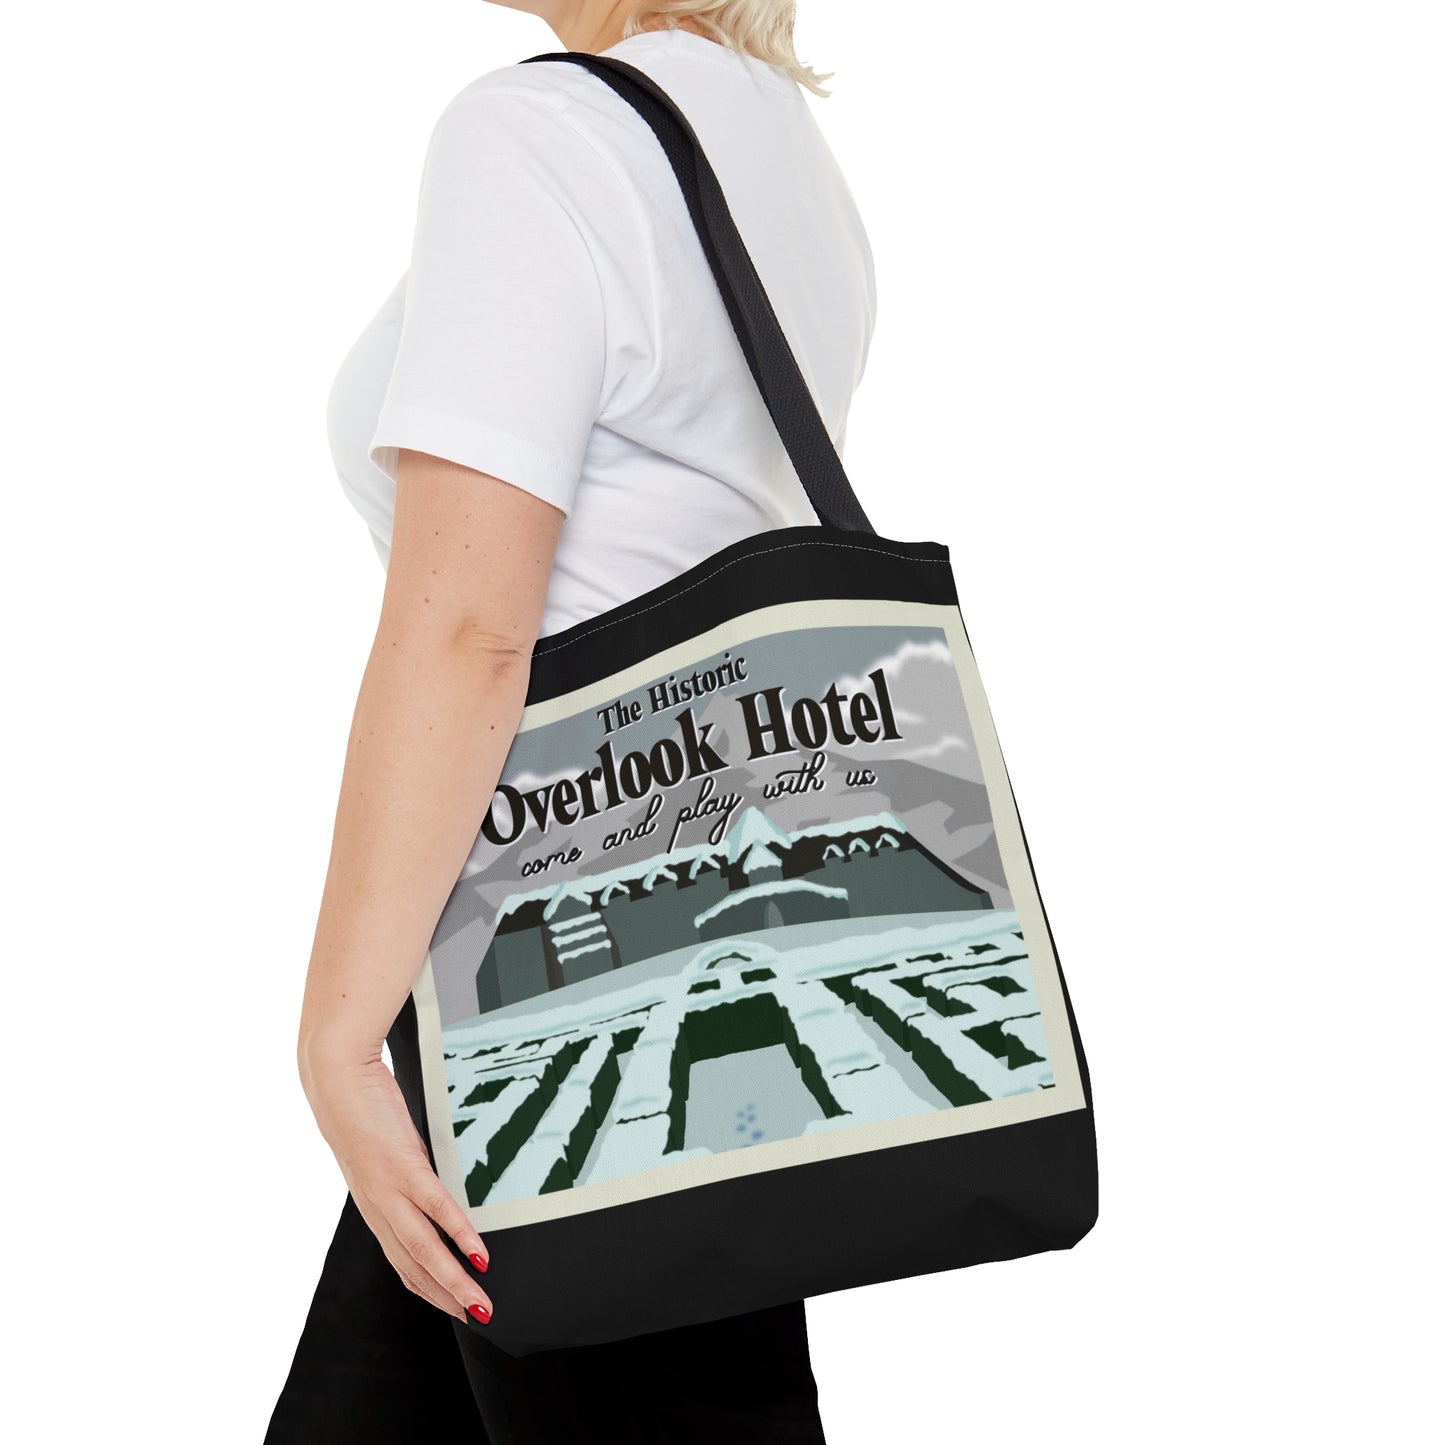 Overlook Hotel Tote Bag (Black)